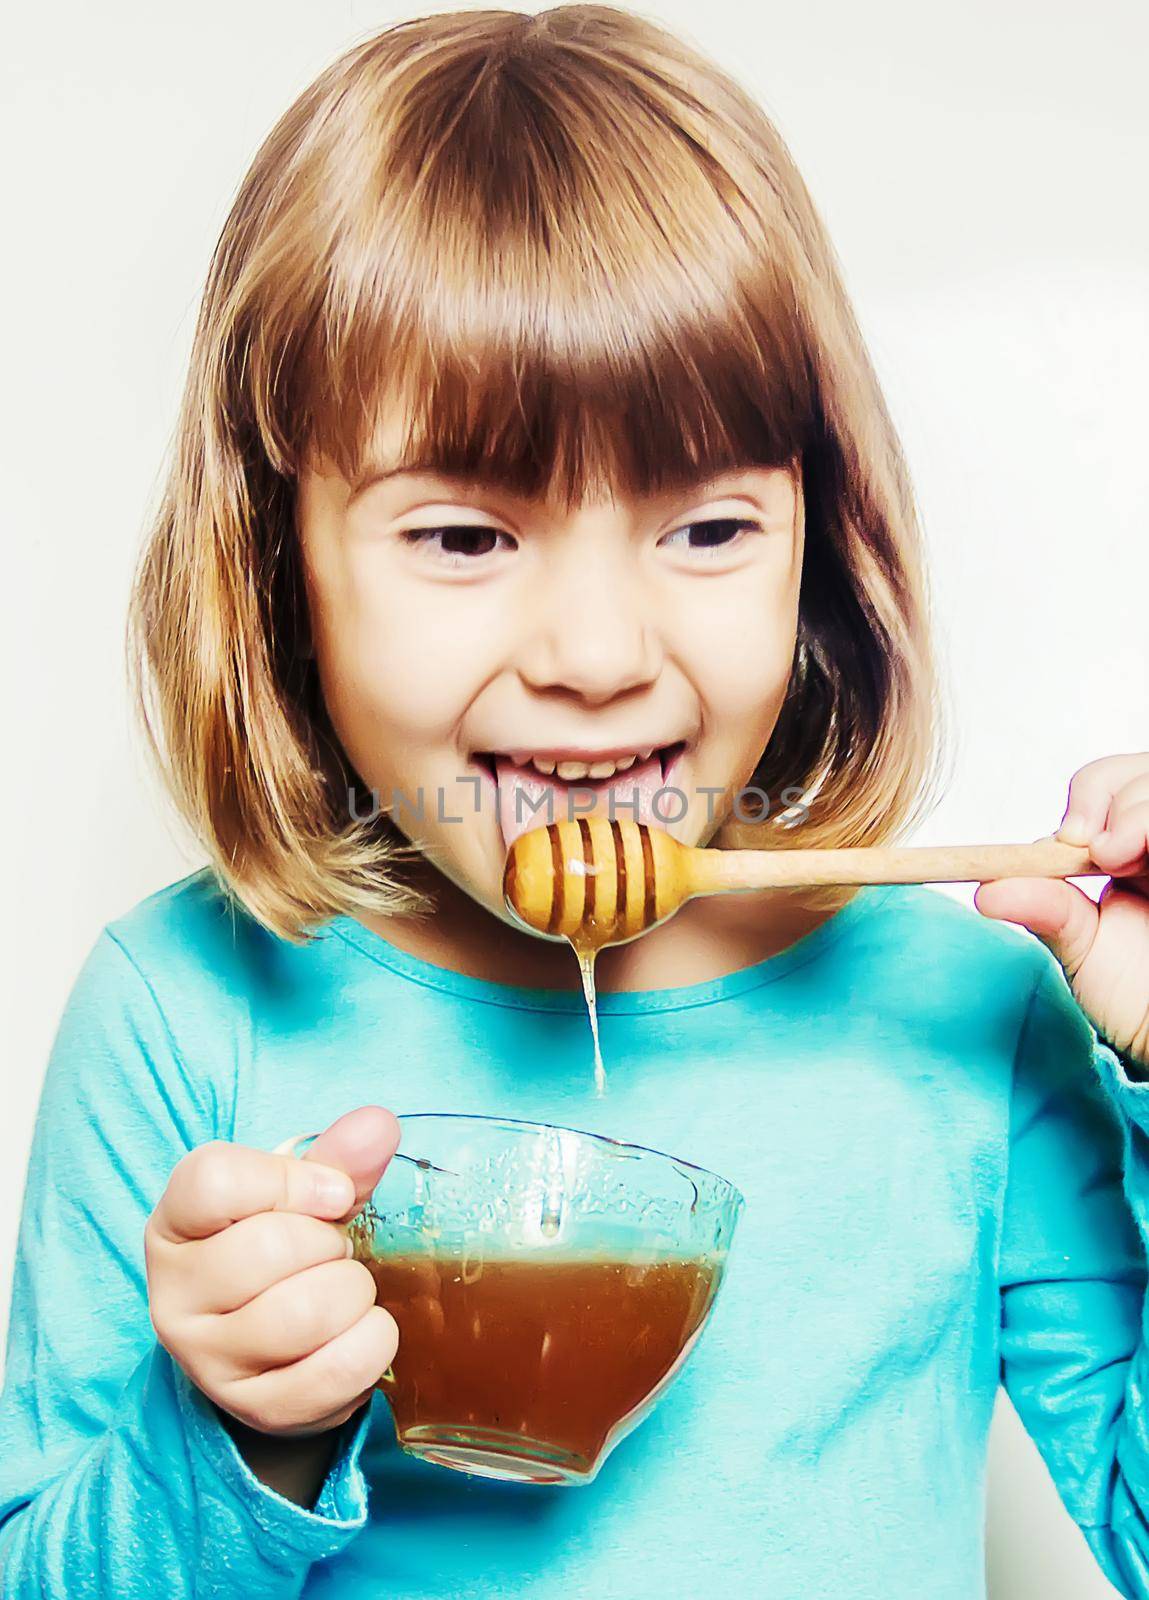 The child eats honey. Selective focus. nature. by yanadjana